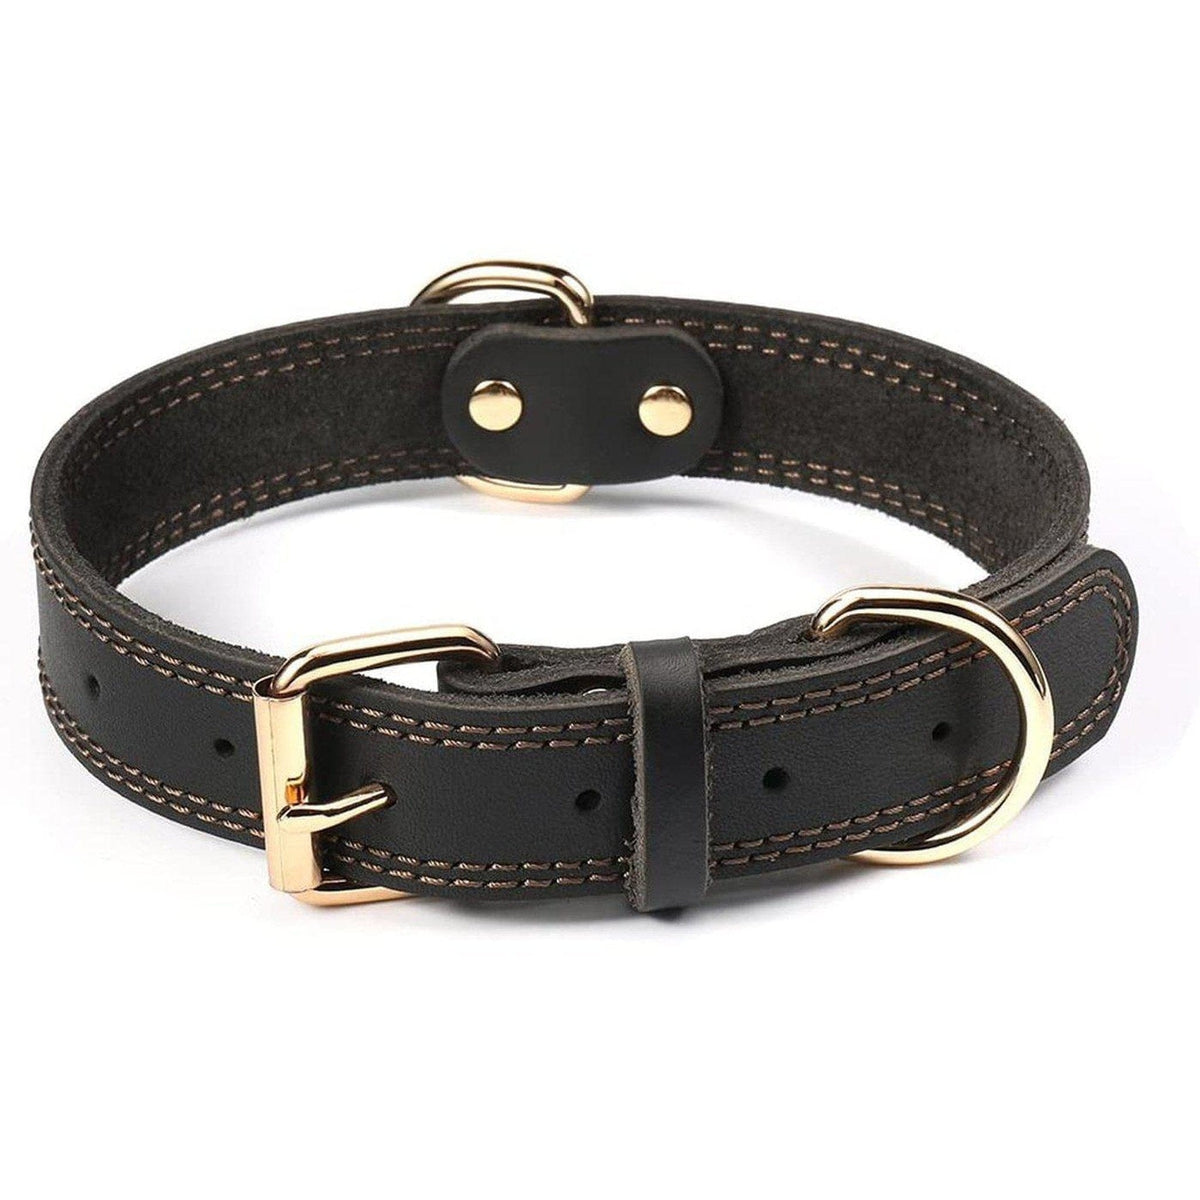 A black Pets Paradise genuine leather heavy duty luxury dog collar.